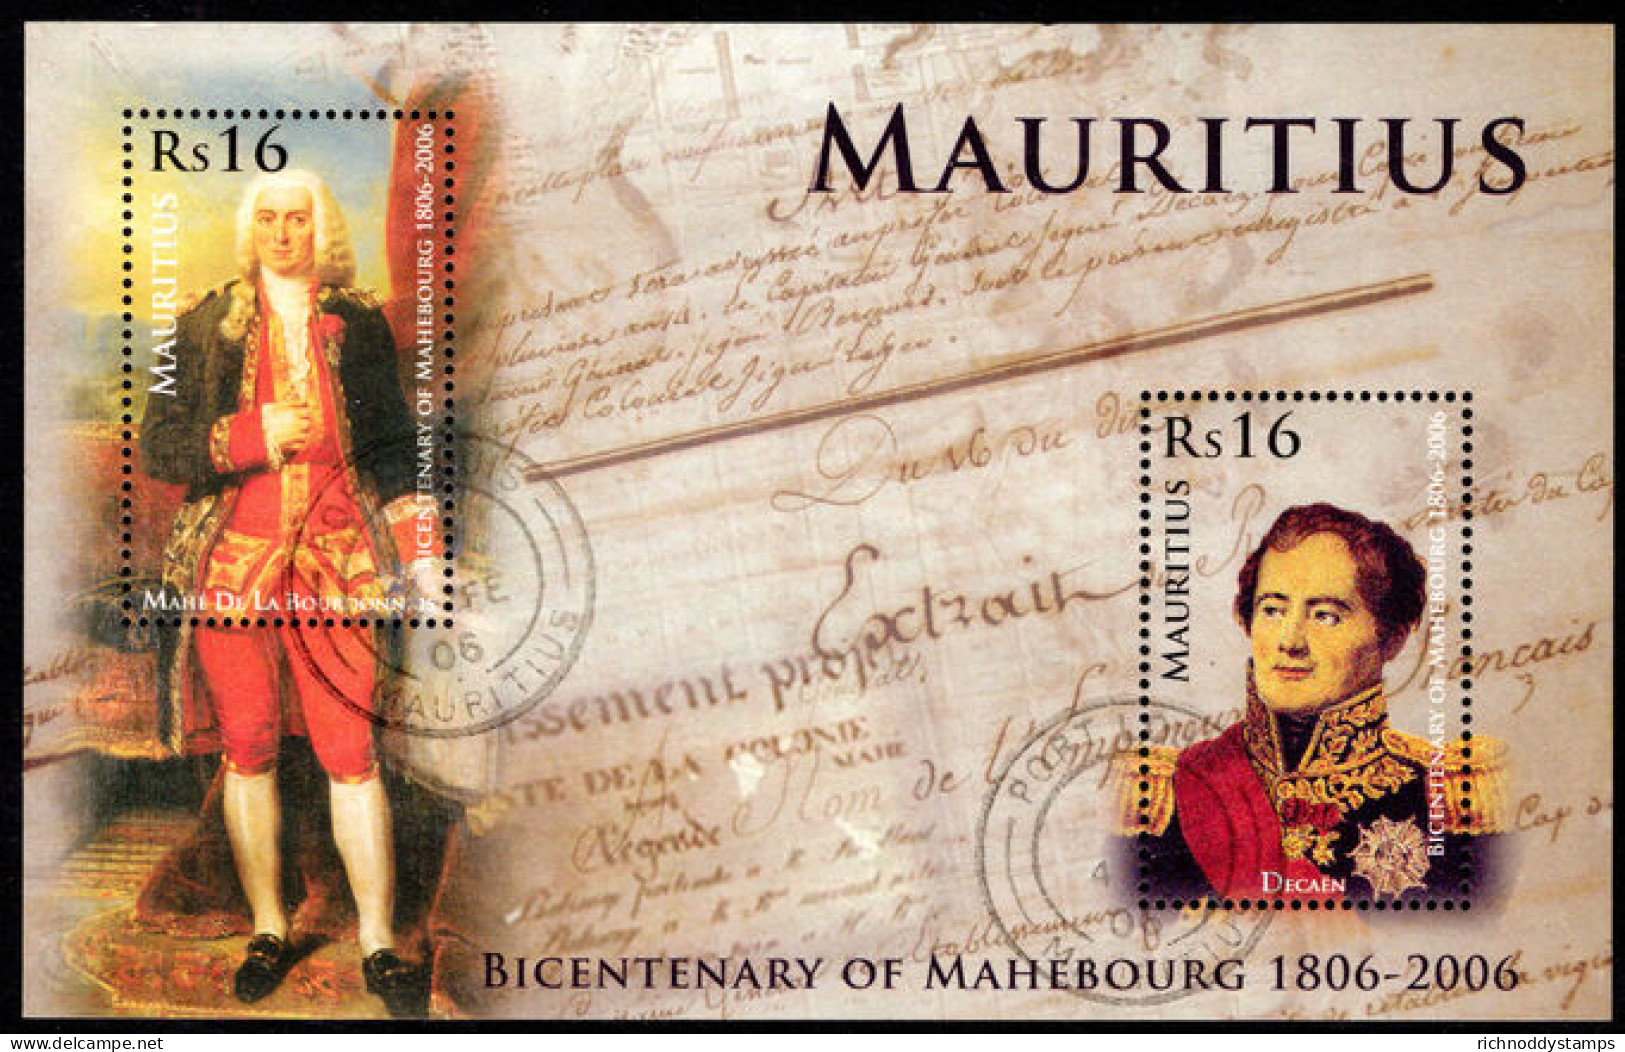 Mauritius 2006 Bicentenary Of Mahebourg Souvenir Sheet Fine Used. - Maurice (1968-...)